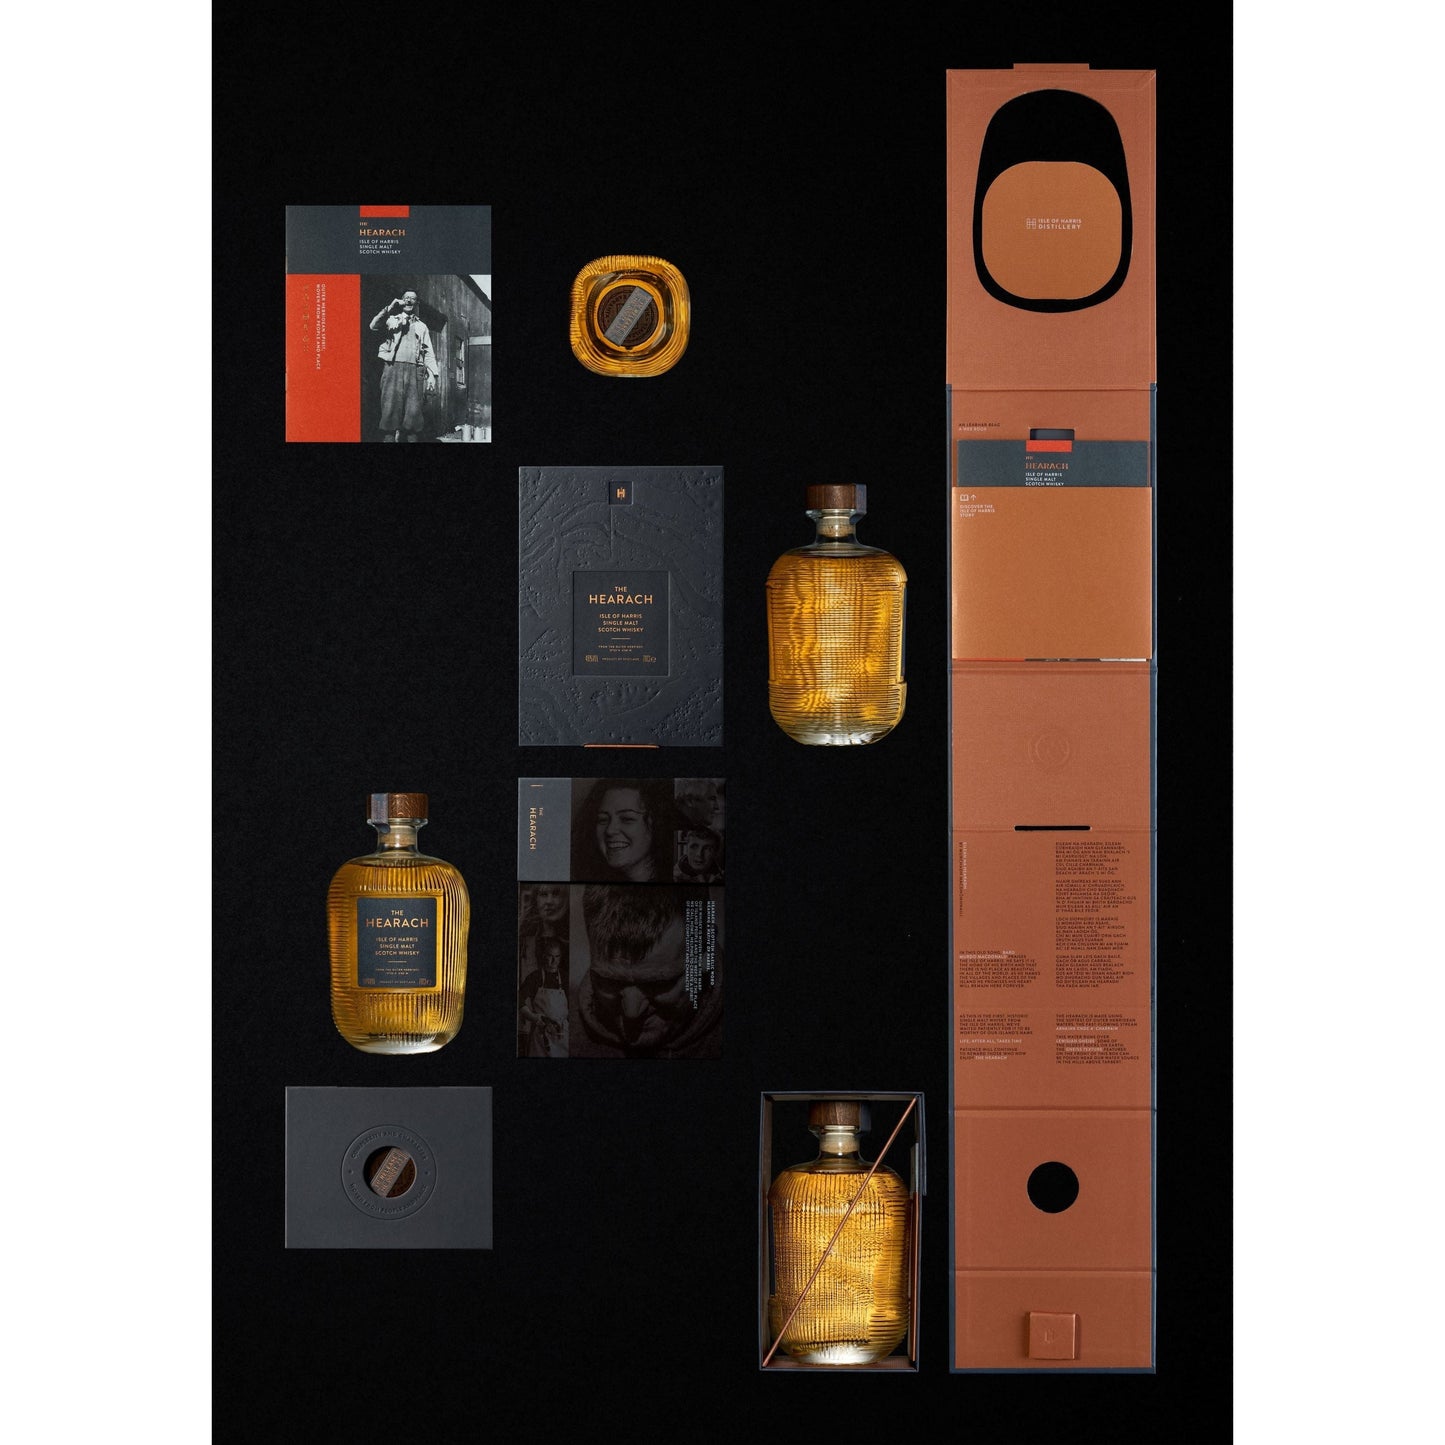 The Hearach - Single Malt Scotch Whisky-Single Malt Scotch Whisky-5060527740174-Fountainhall Wines